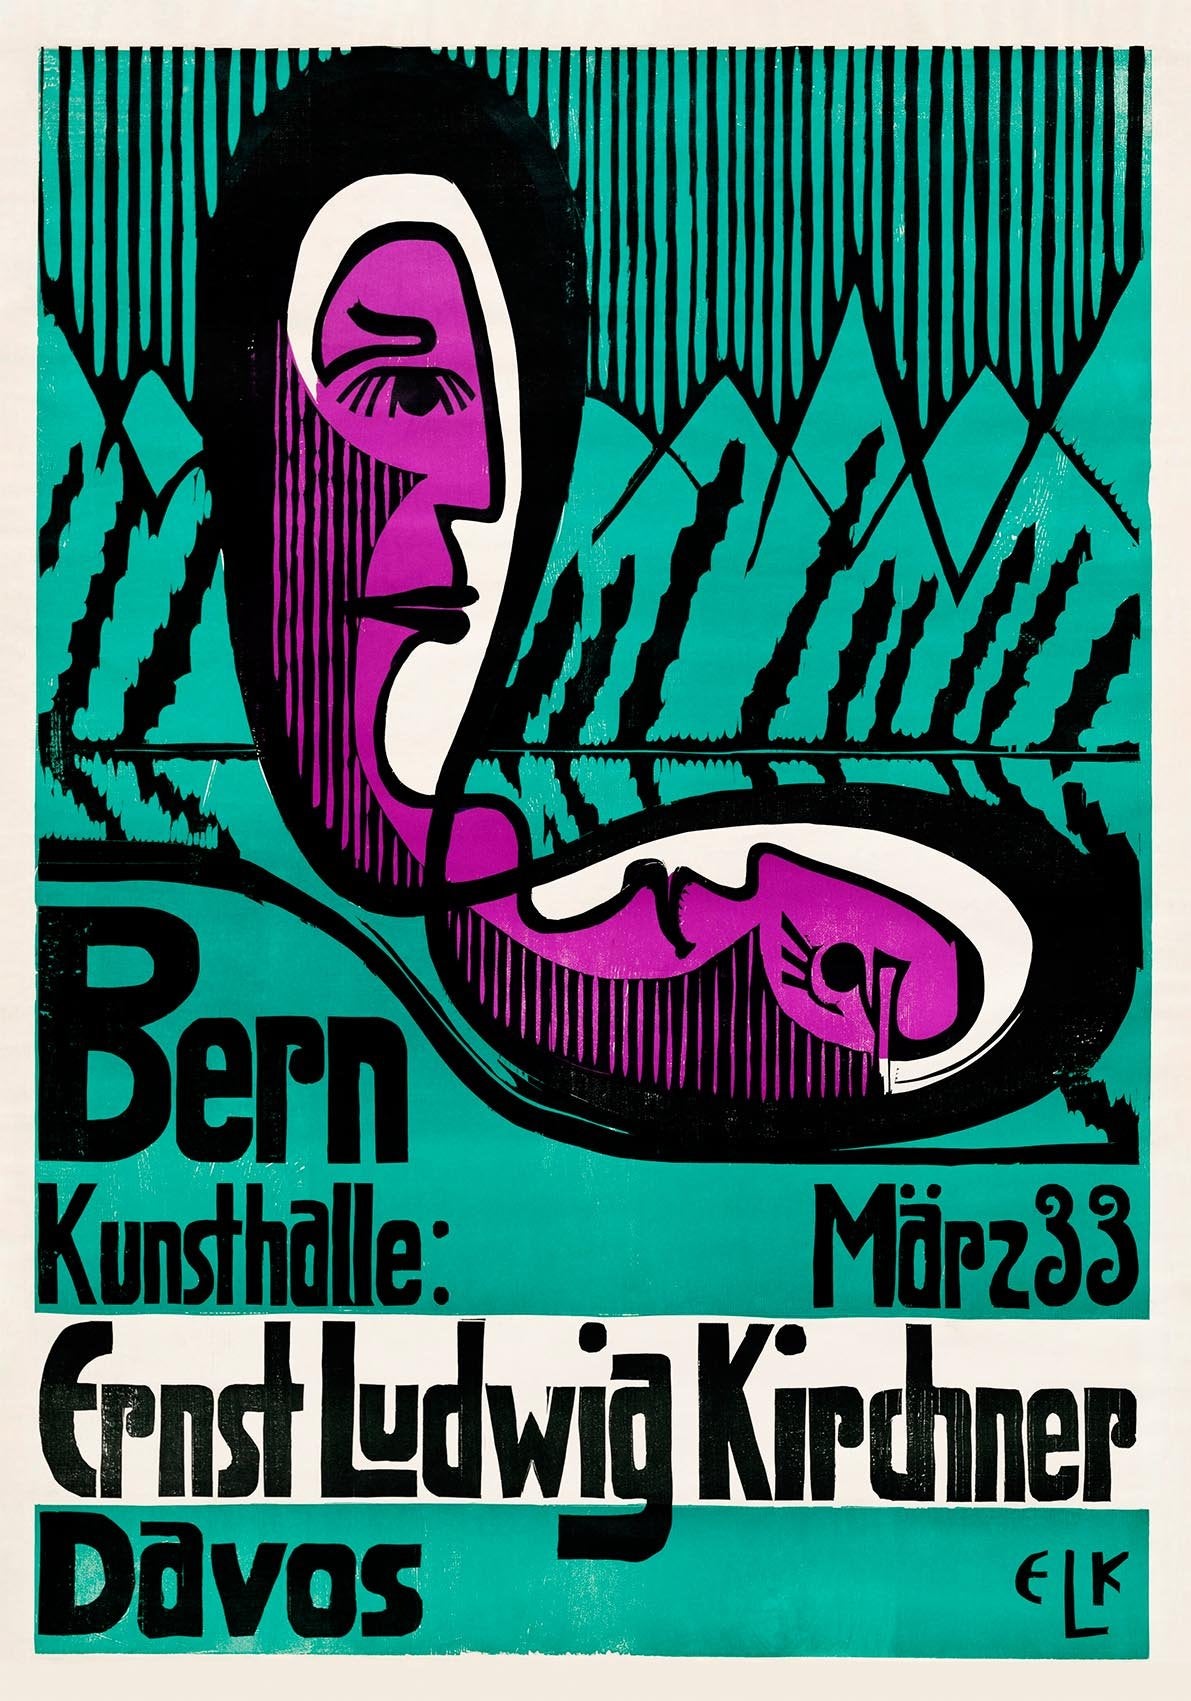 Bern Kunsthalle by Ernst Kirchner